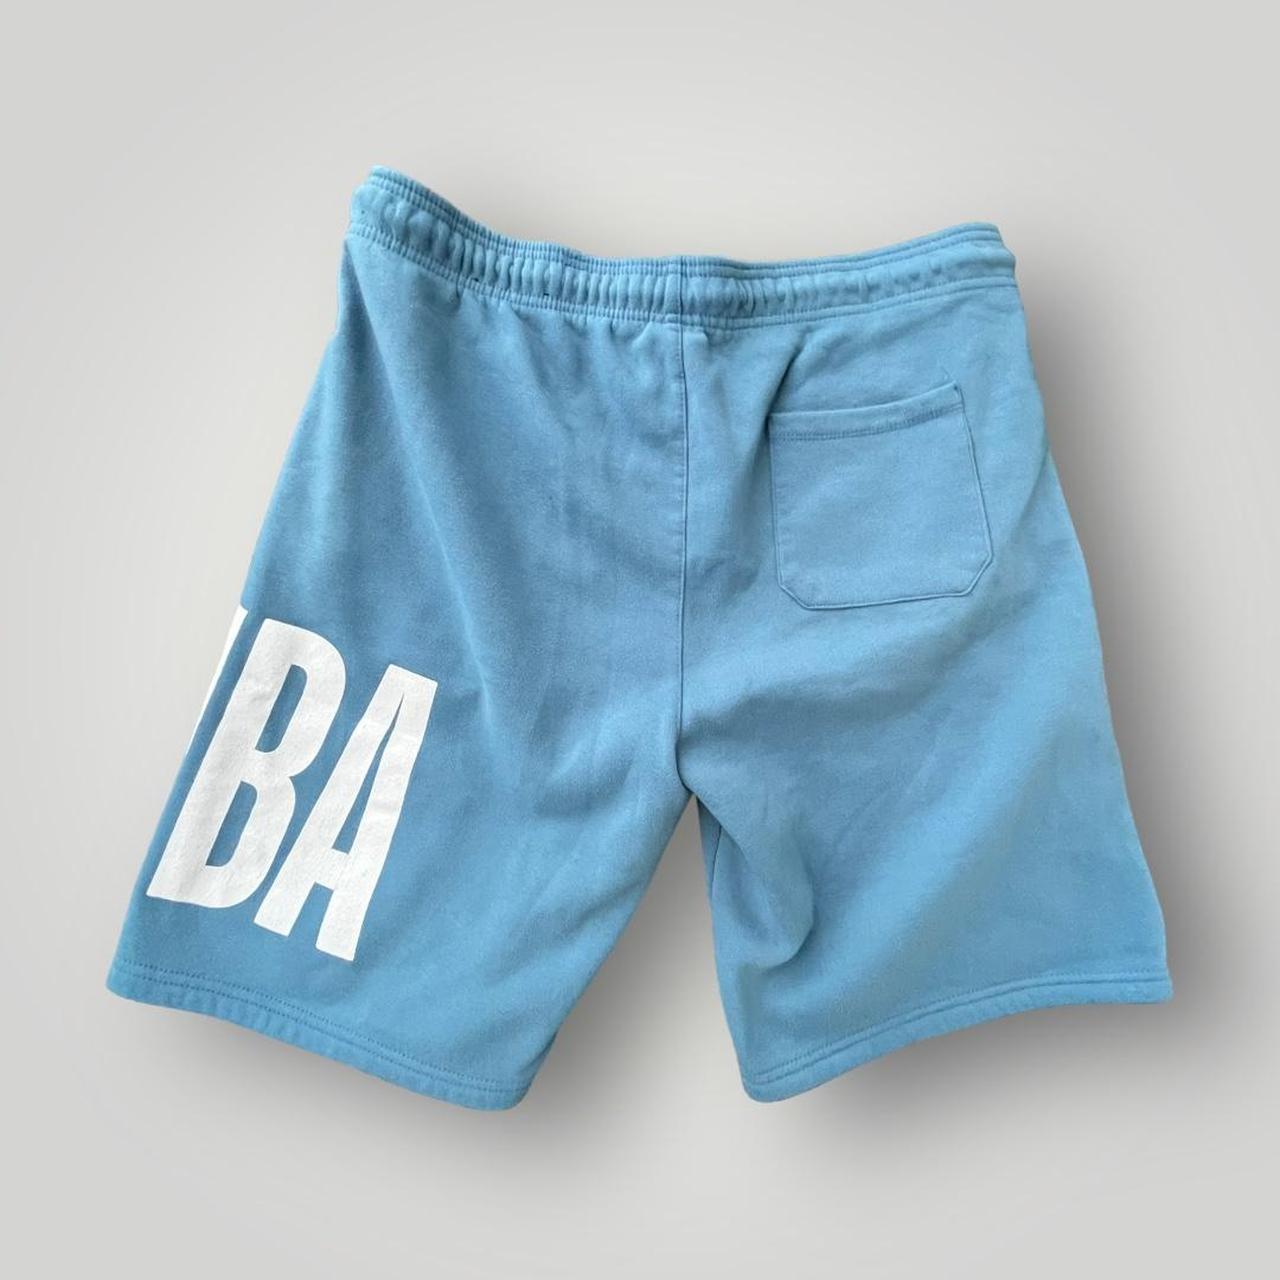 Official Nba big print logo shorts., Very clean pair